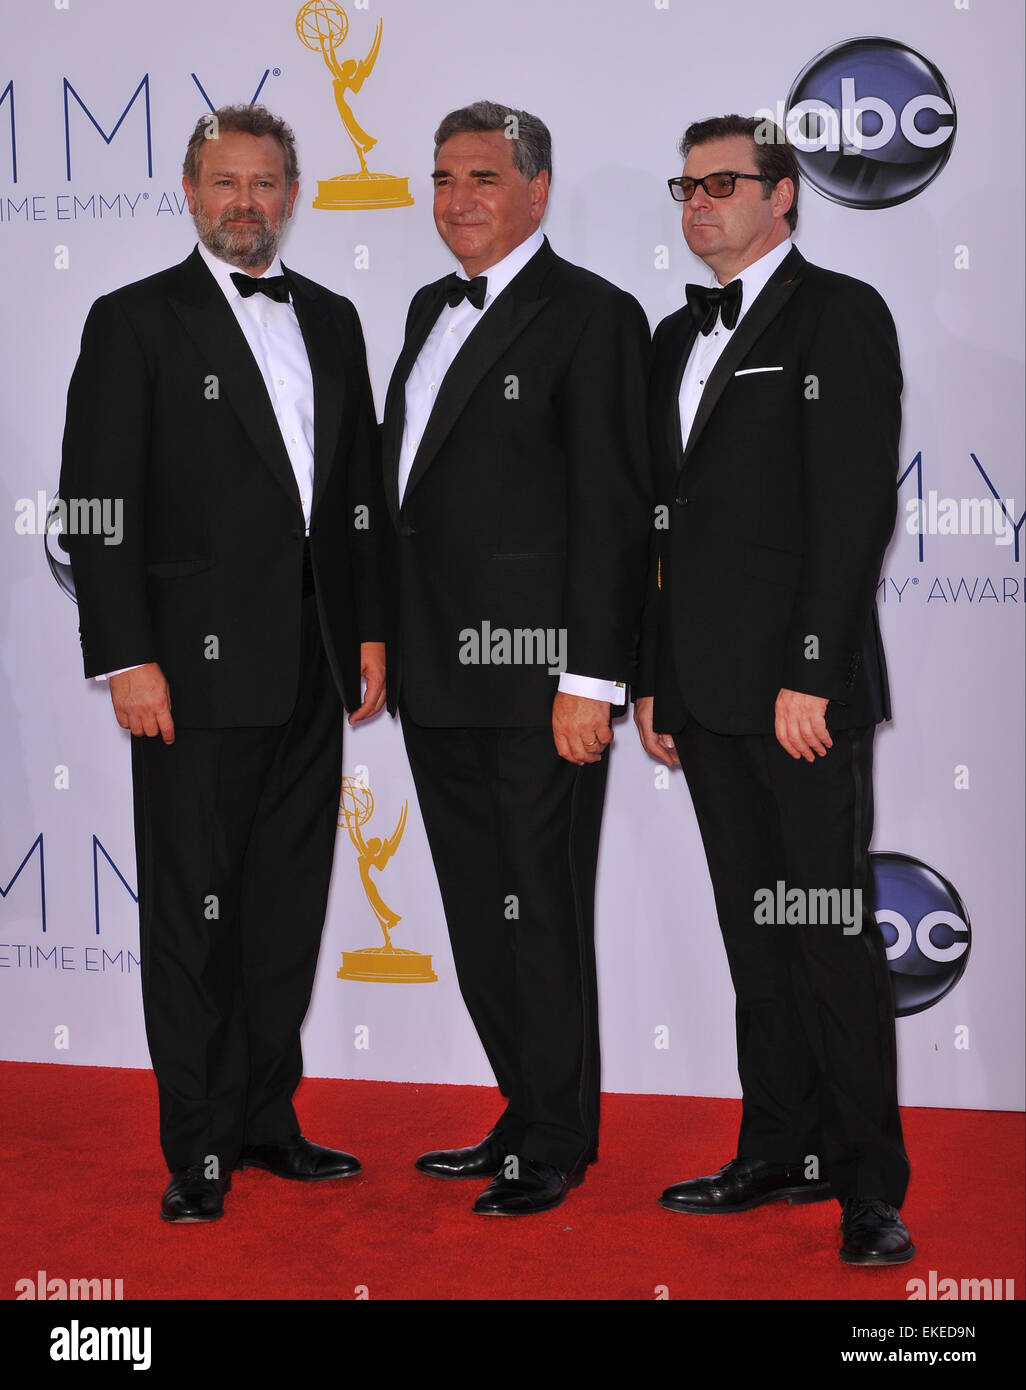 LOS ANGELES, CA - SEPTEMBER 23, 2012: Downton Abbey stars Hugh Bonneville, Brendan Coyle & Jim Carter at the 64th Primetime Emmy Awards at the Nokia Theatre LA Live. Stock Photo